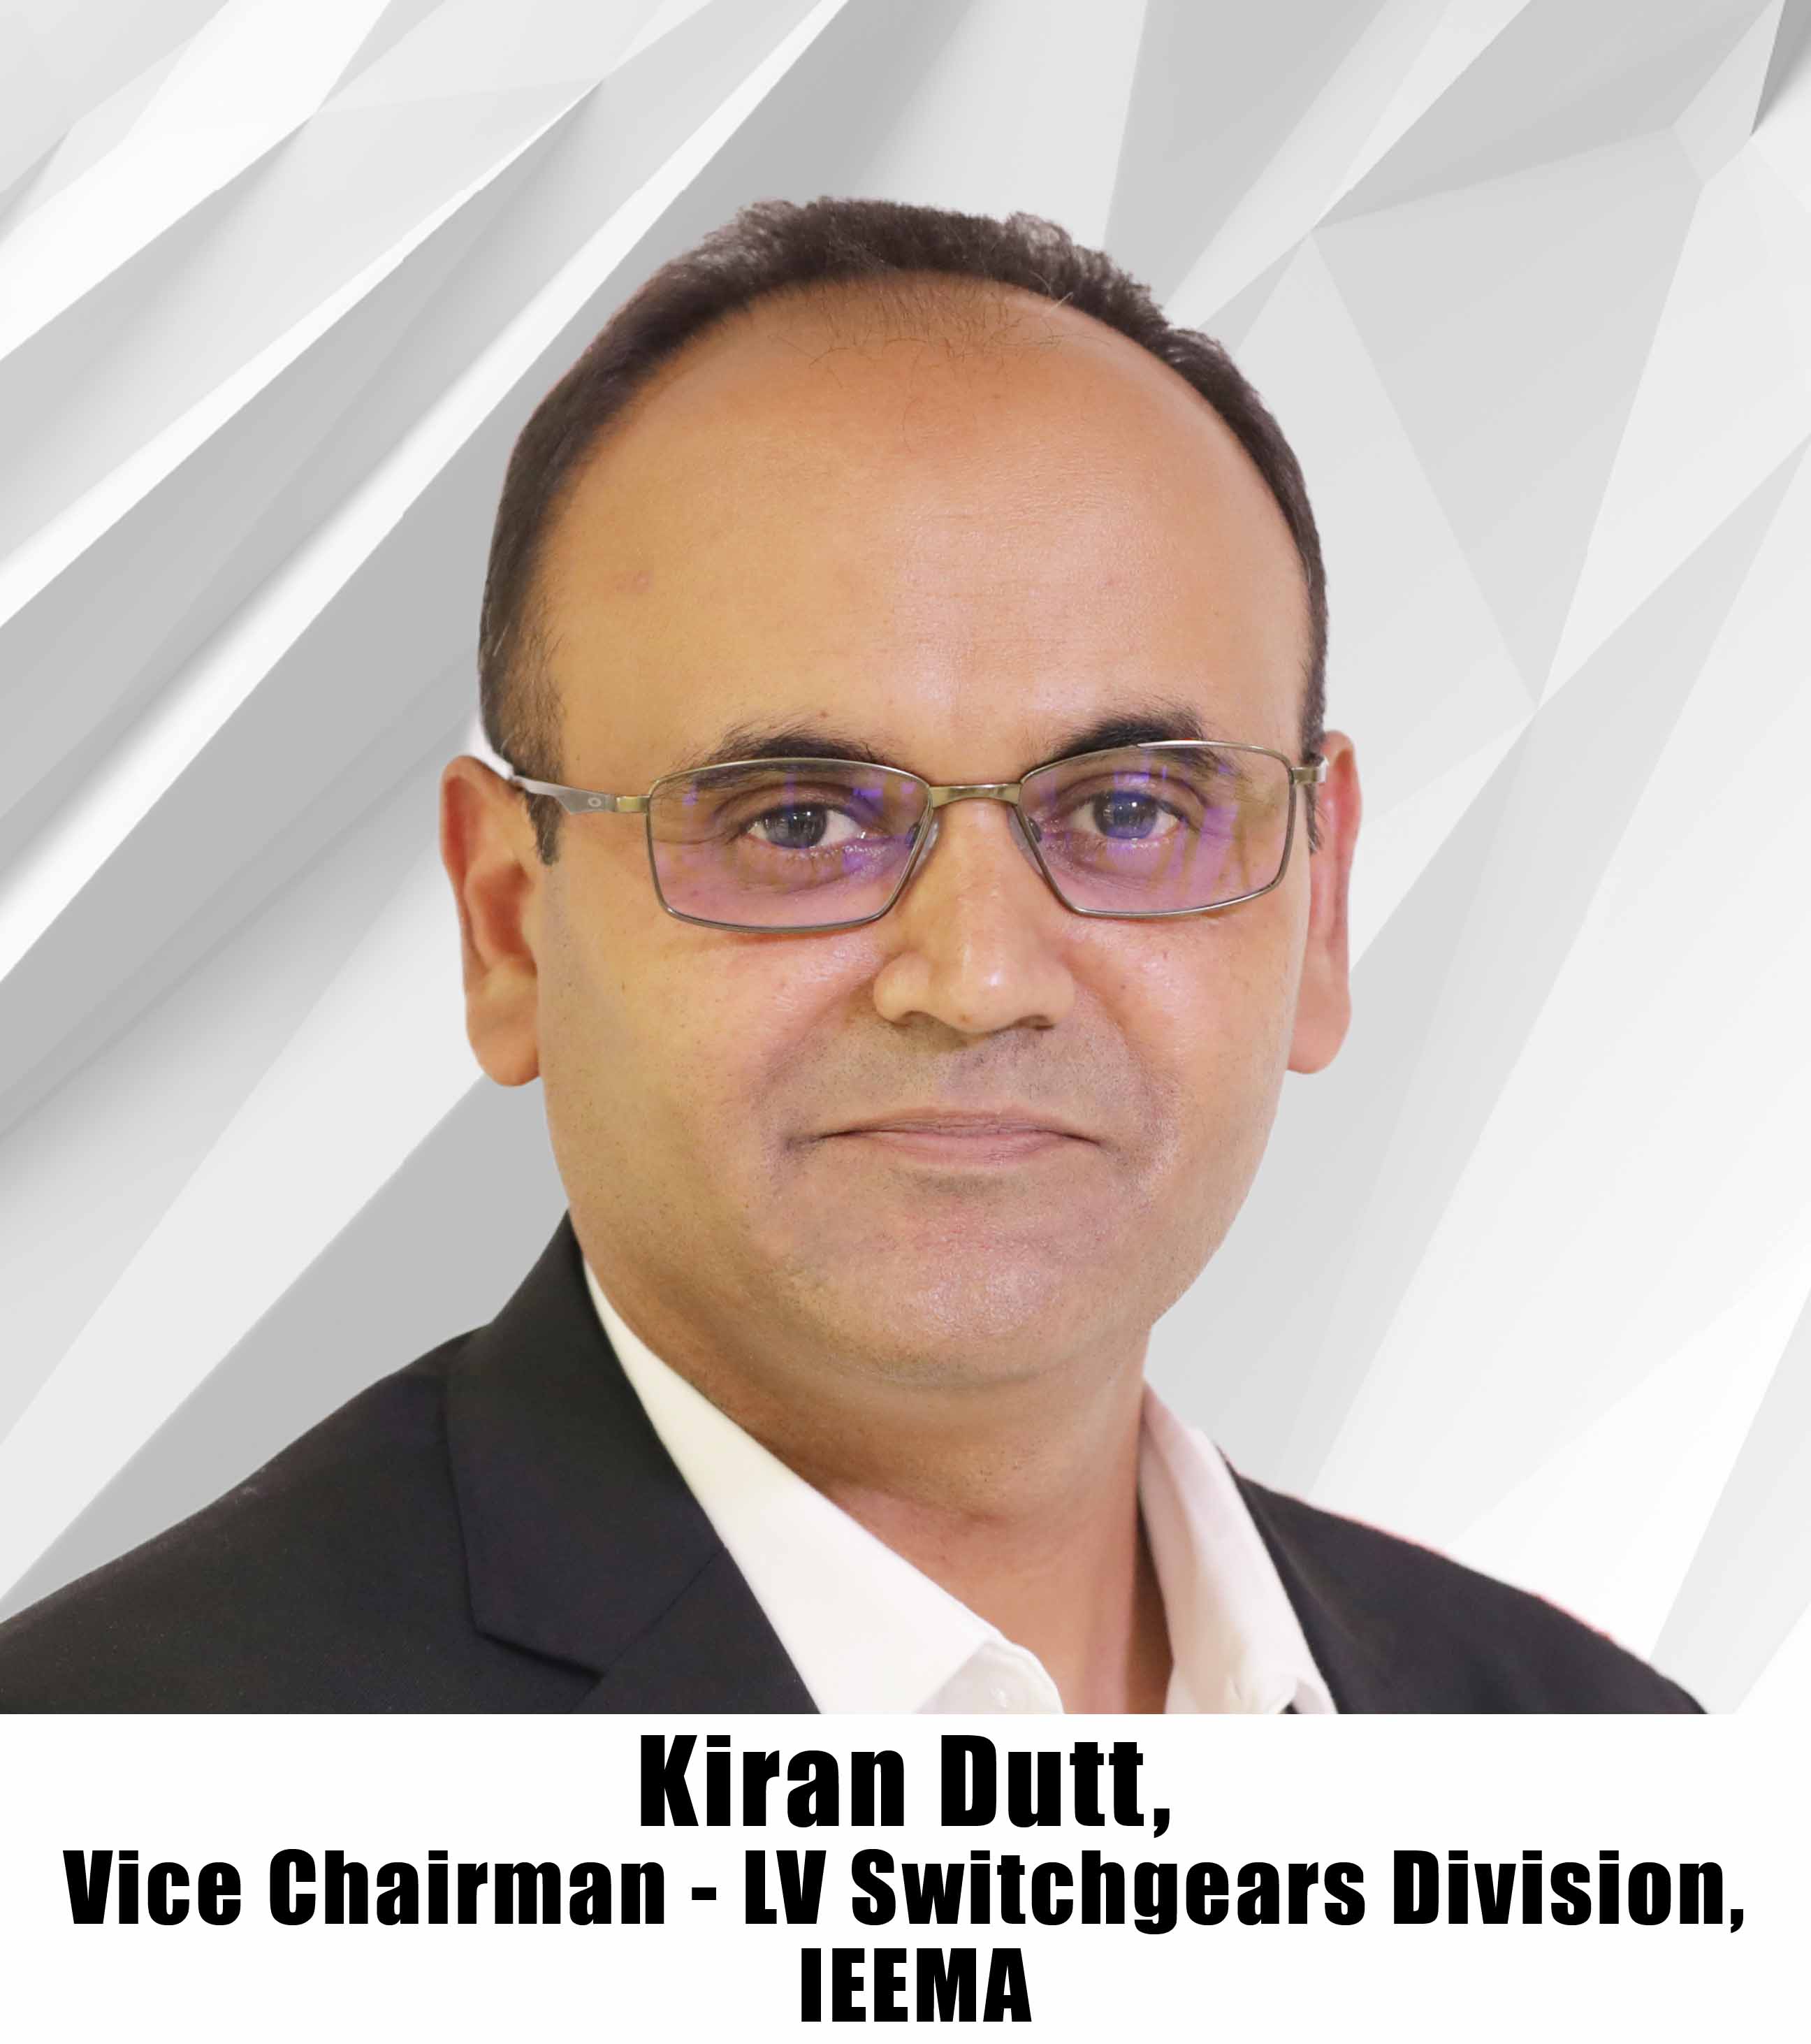 Kiran Dutt, Vice Chairman - LV Switchgears Division, IEEMA